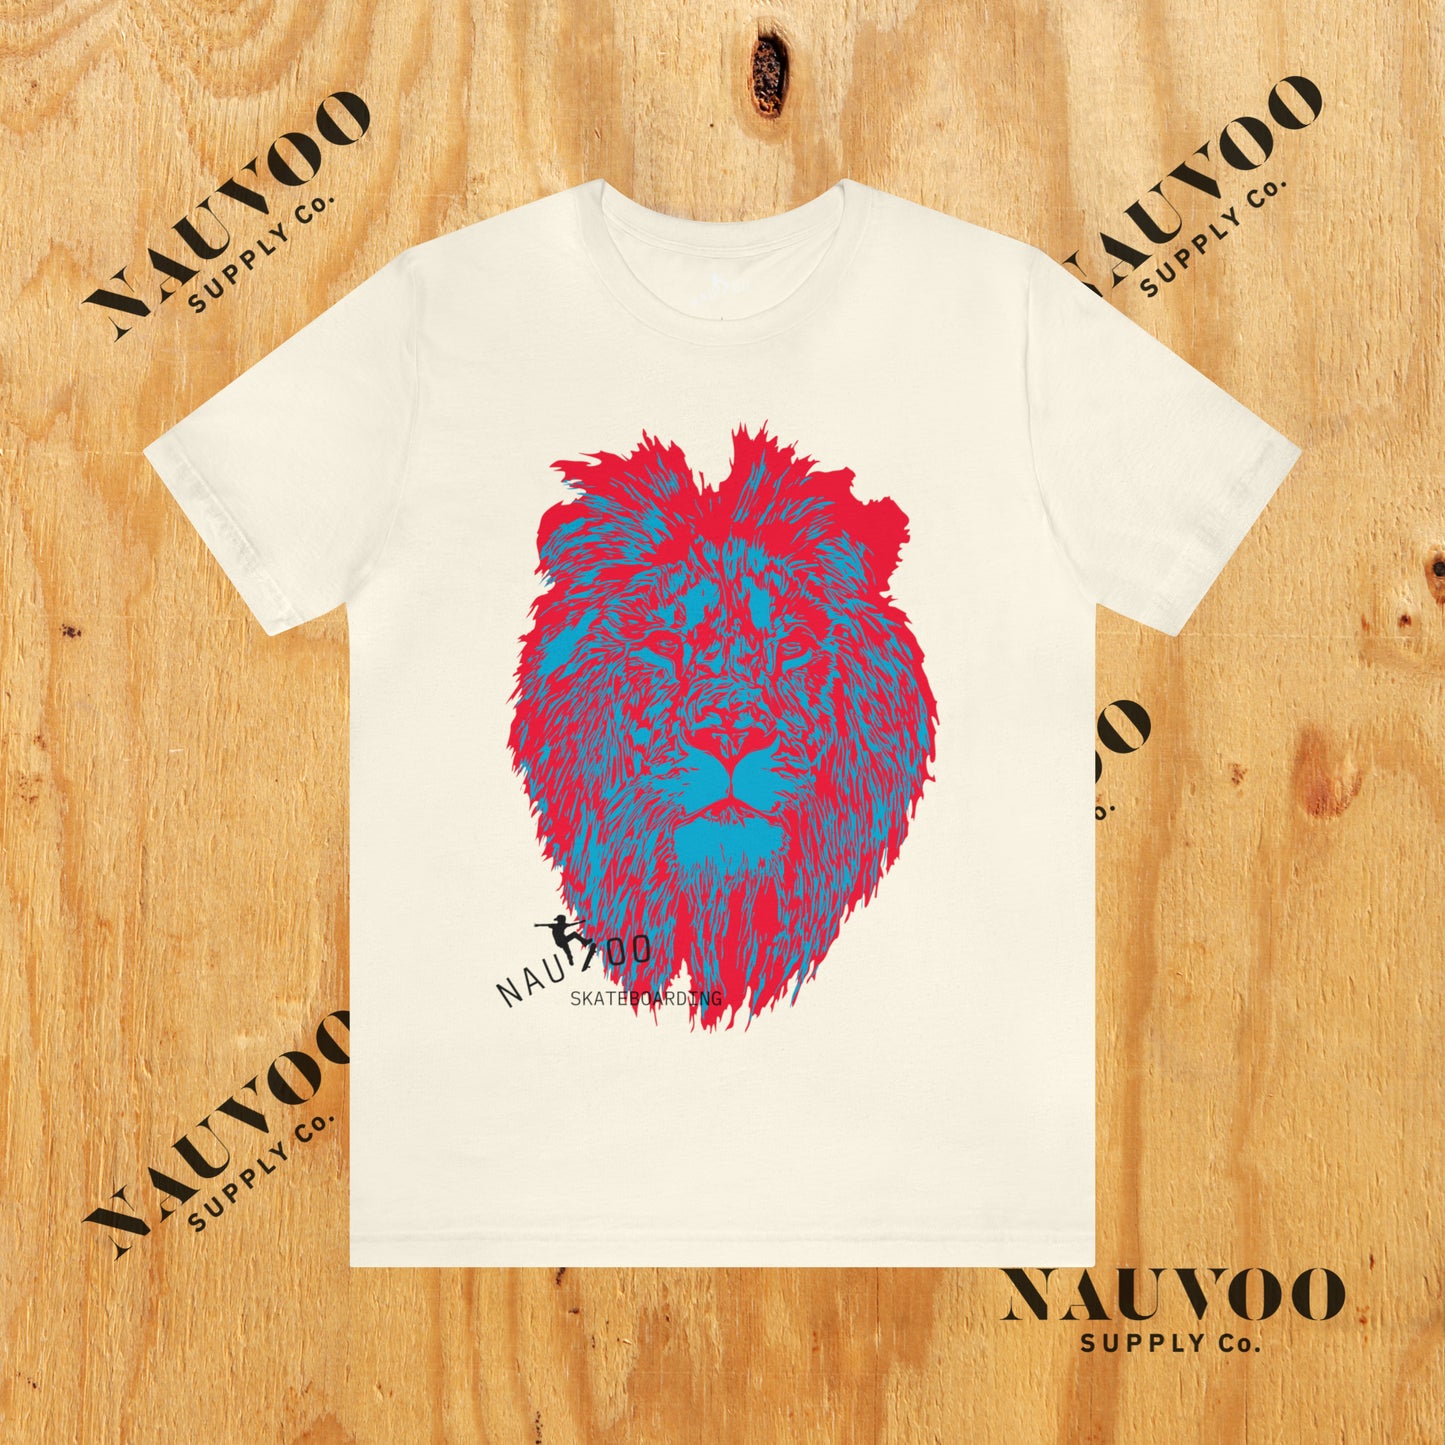 Nauvoo Skateboarding Lion of Judah Shirt